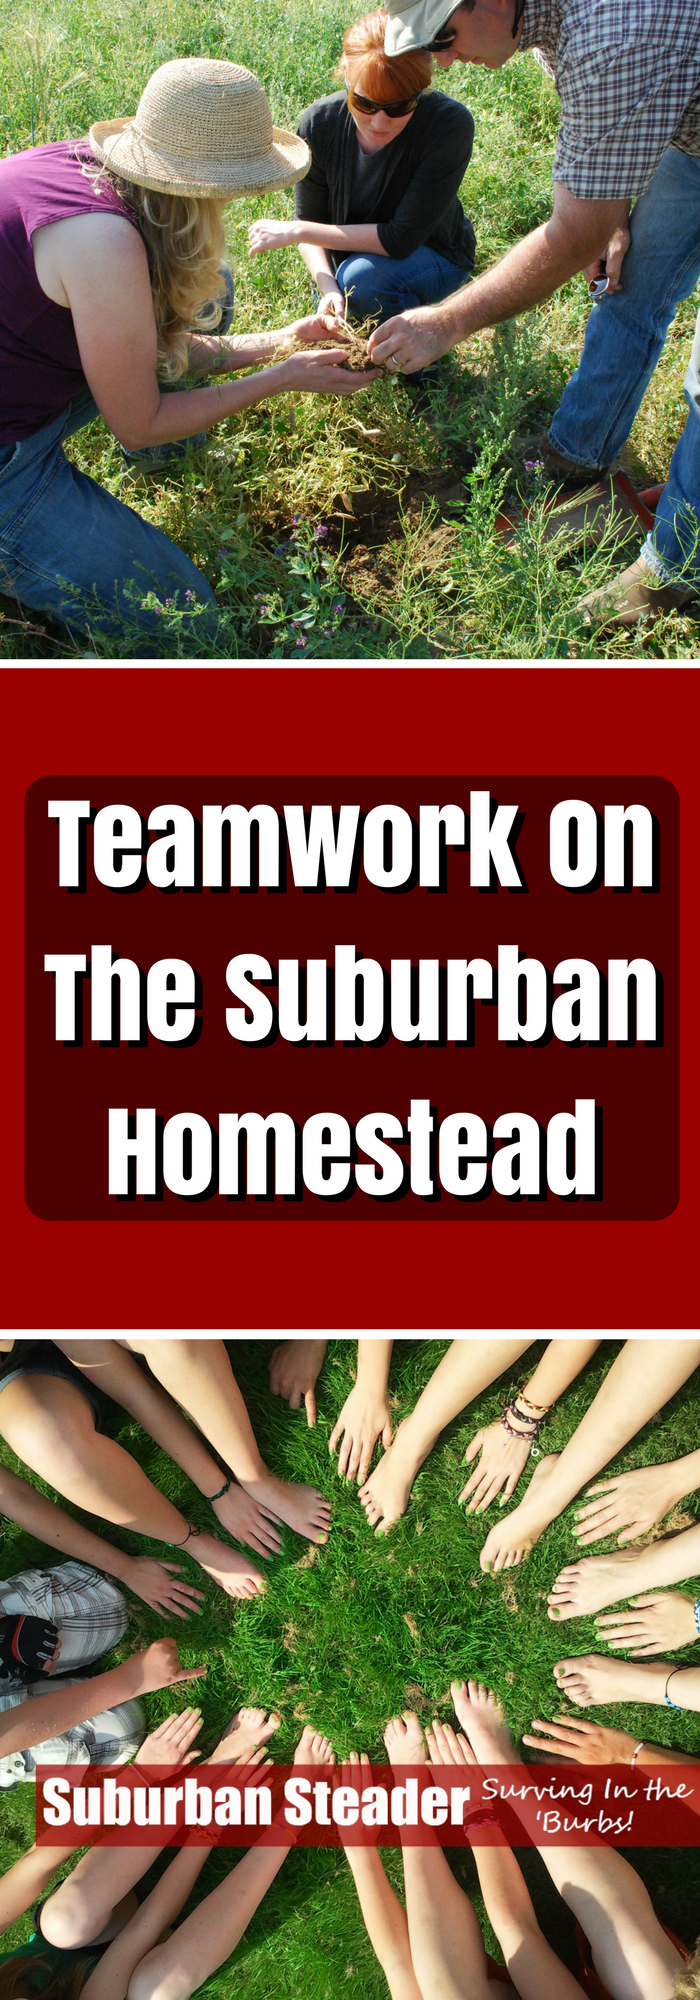 Teamwork On The Suburban Homestead